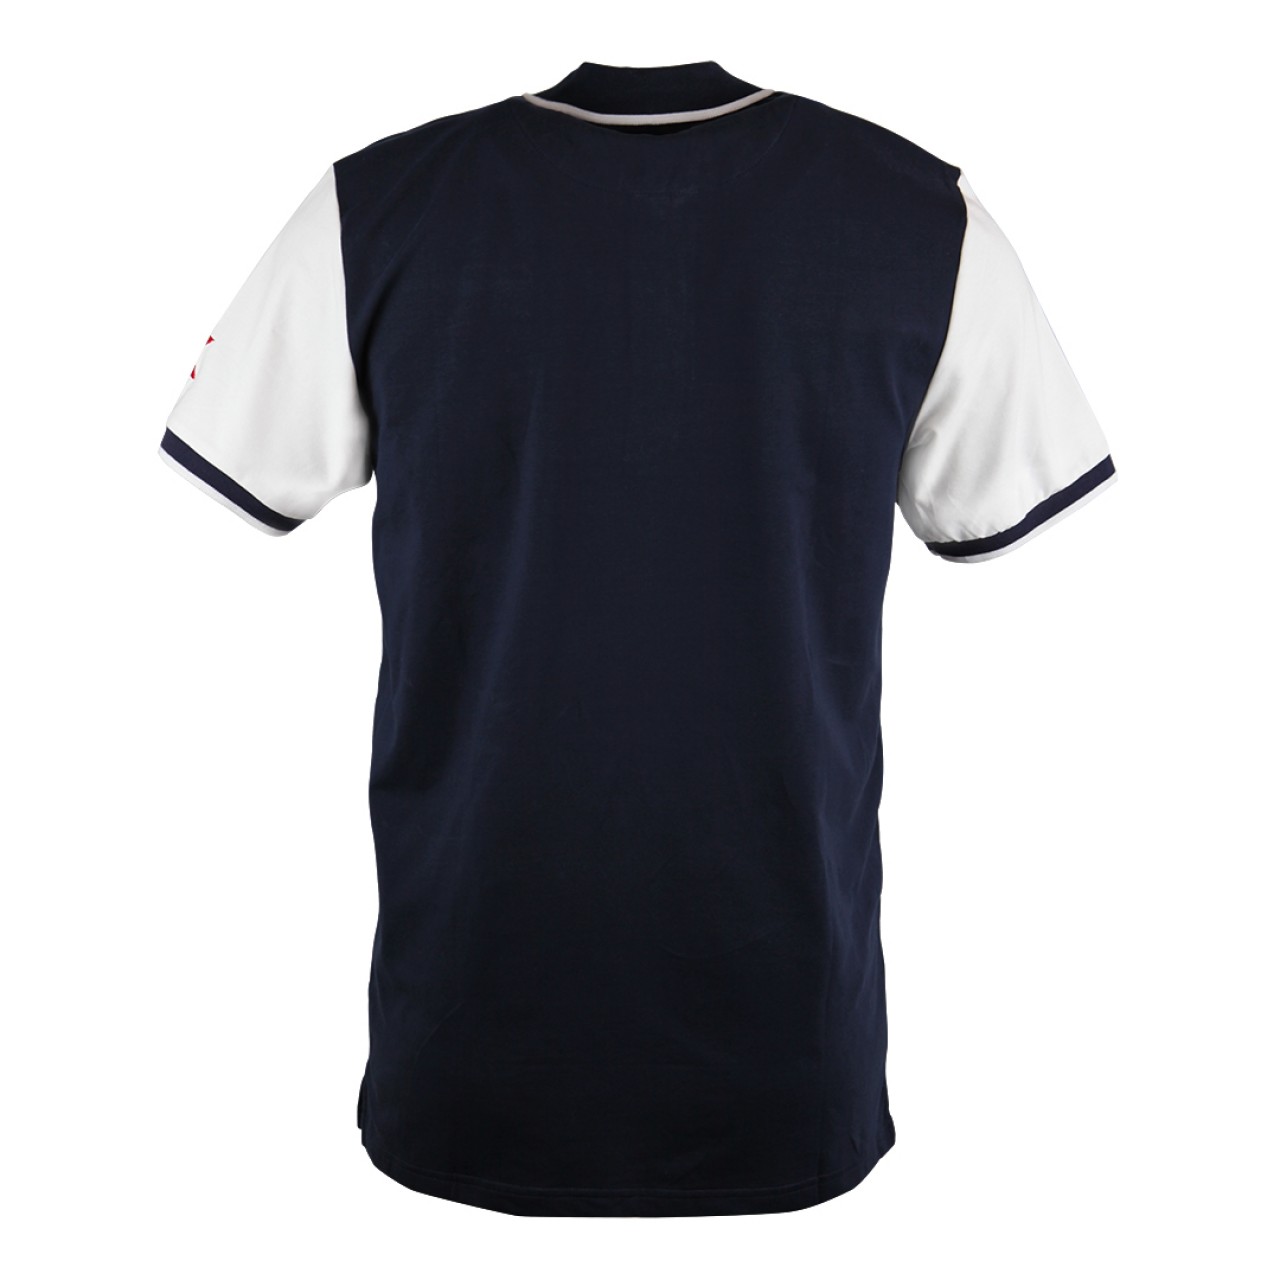 Zeekas Mens Navy Blue And White Striped Polo Shirt Short Sleeve With Bottom